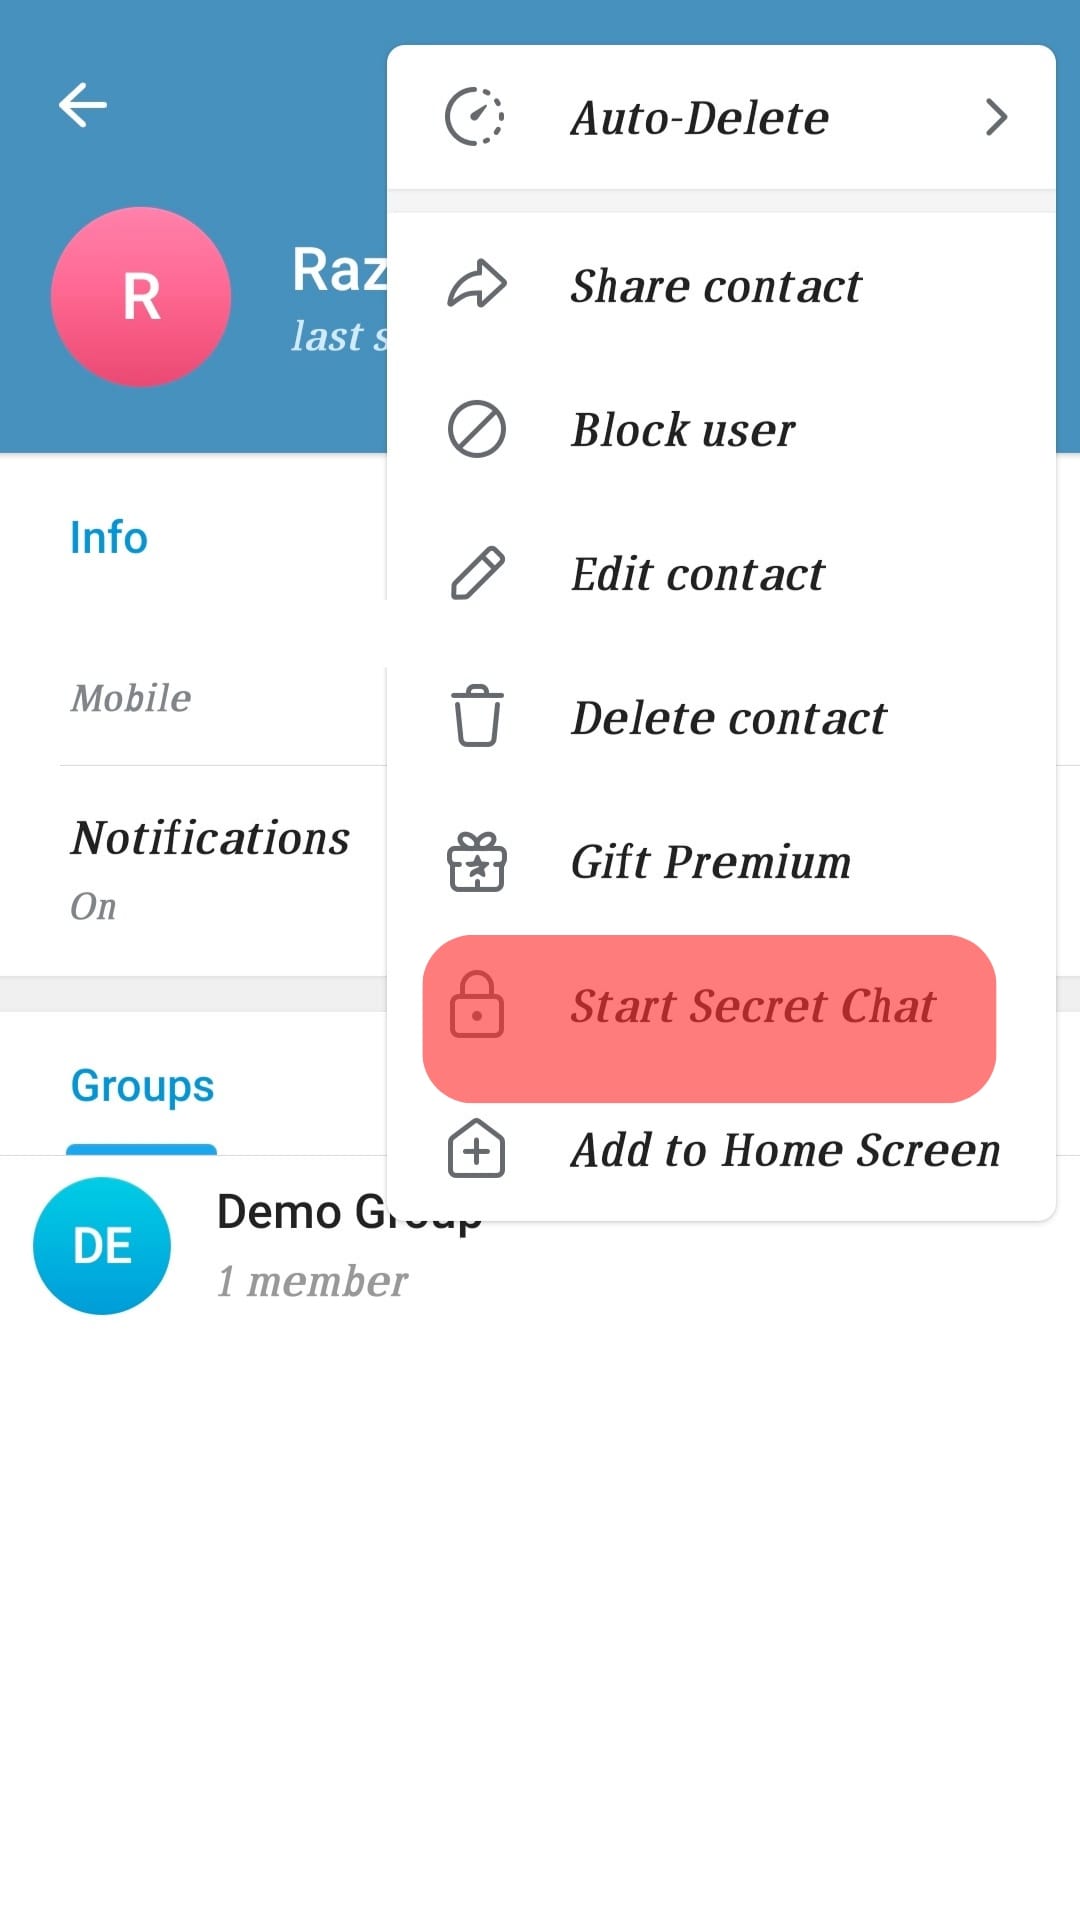 Select Start Secret Chat.